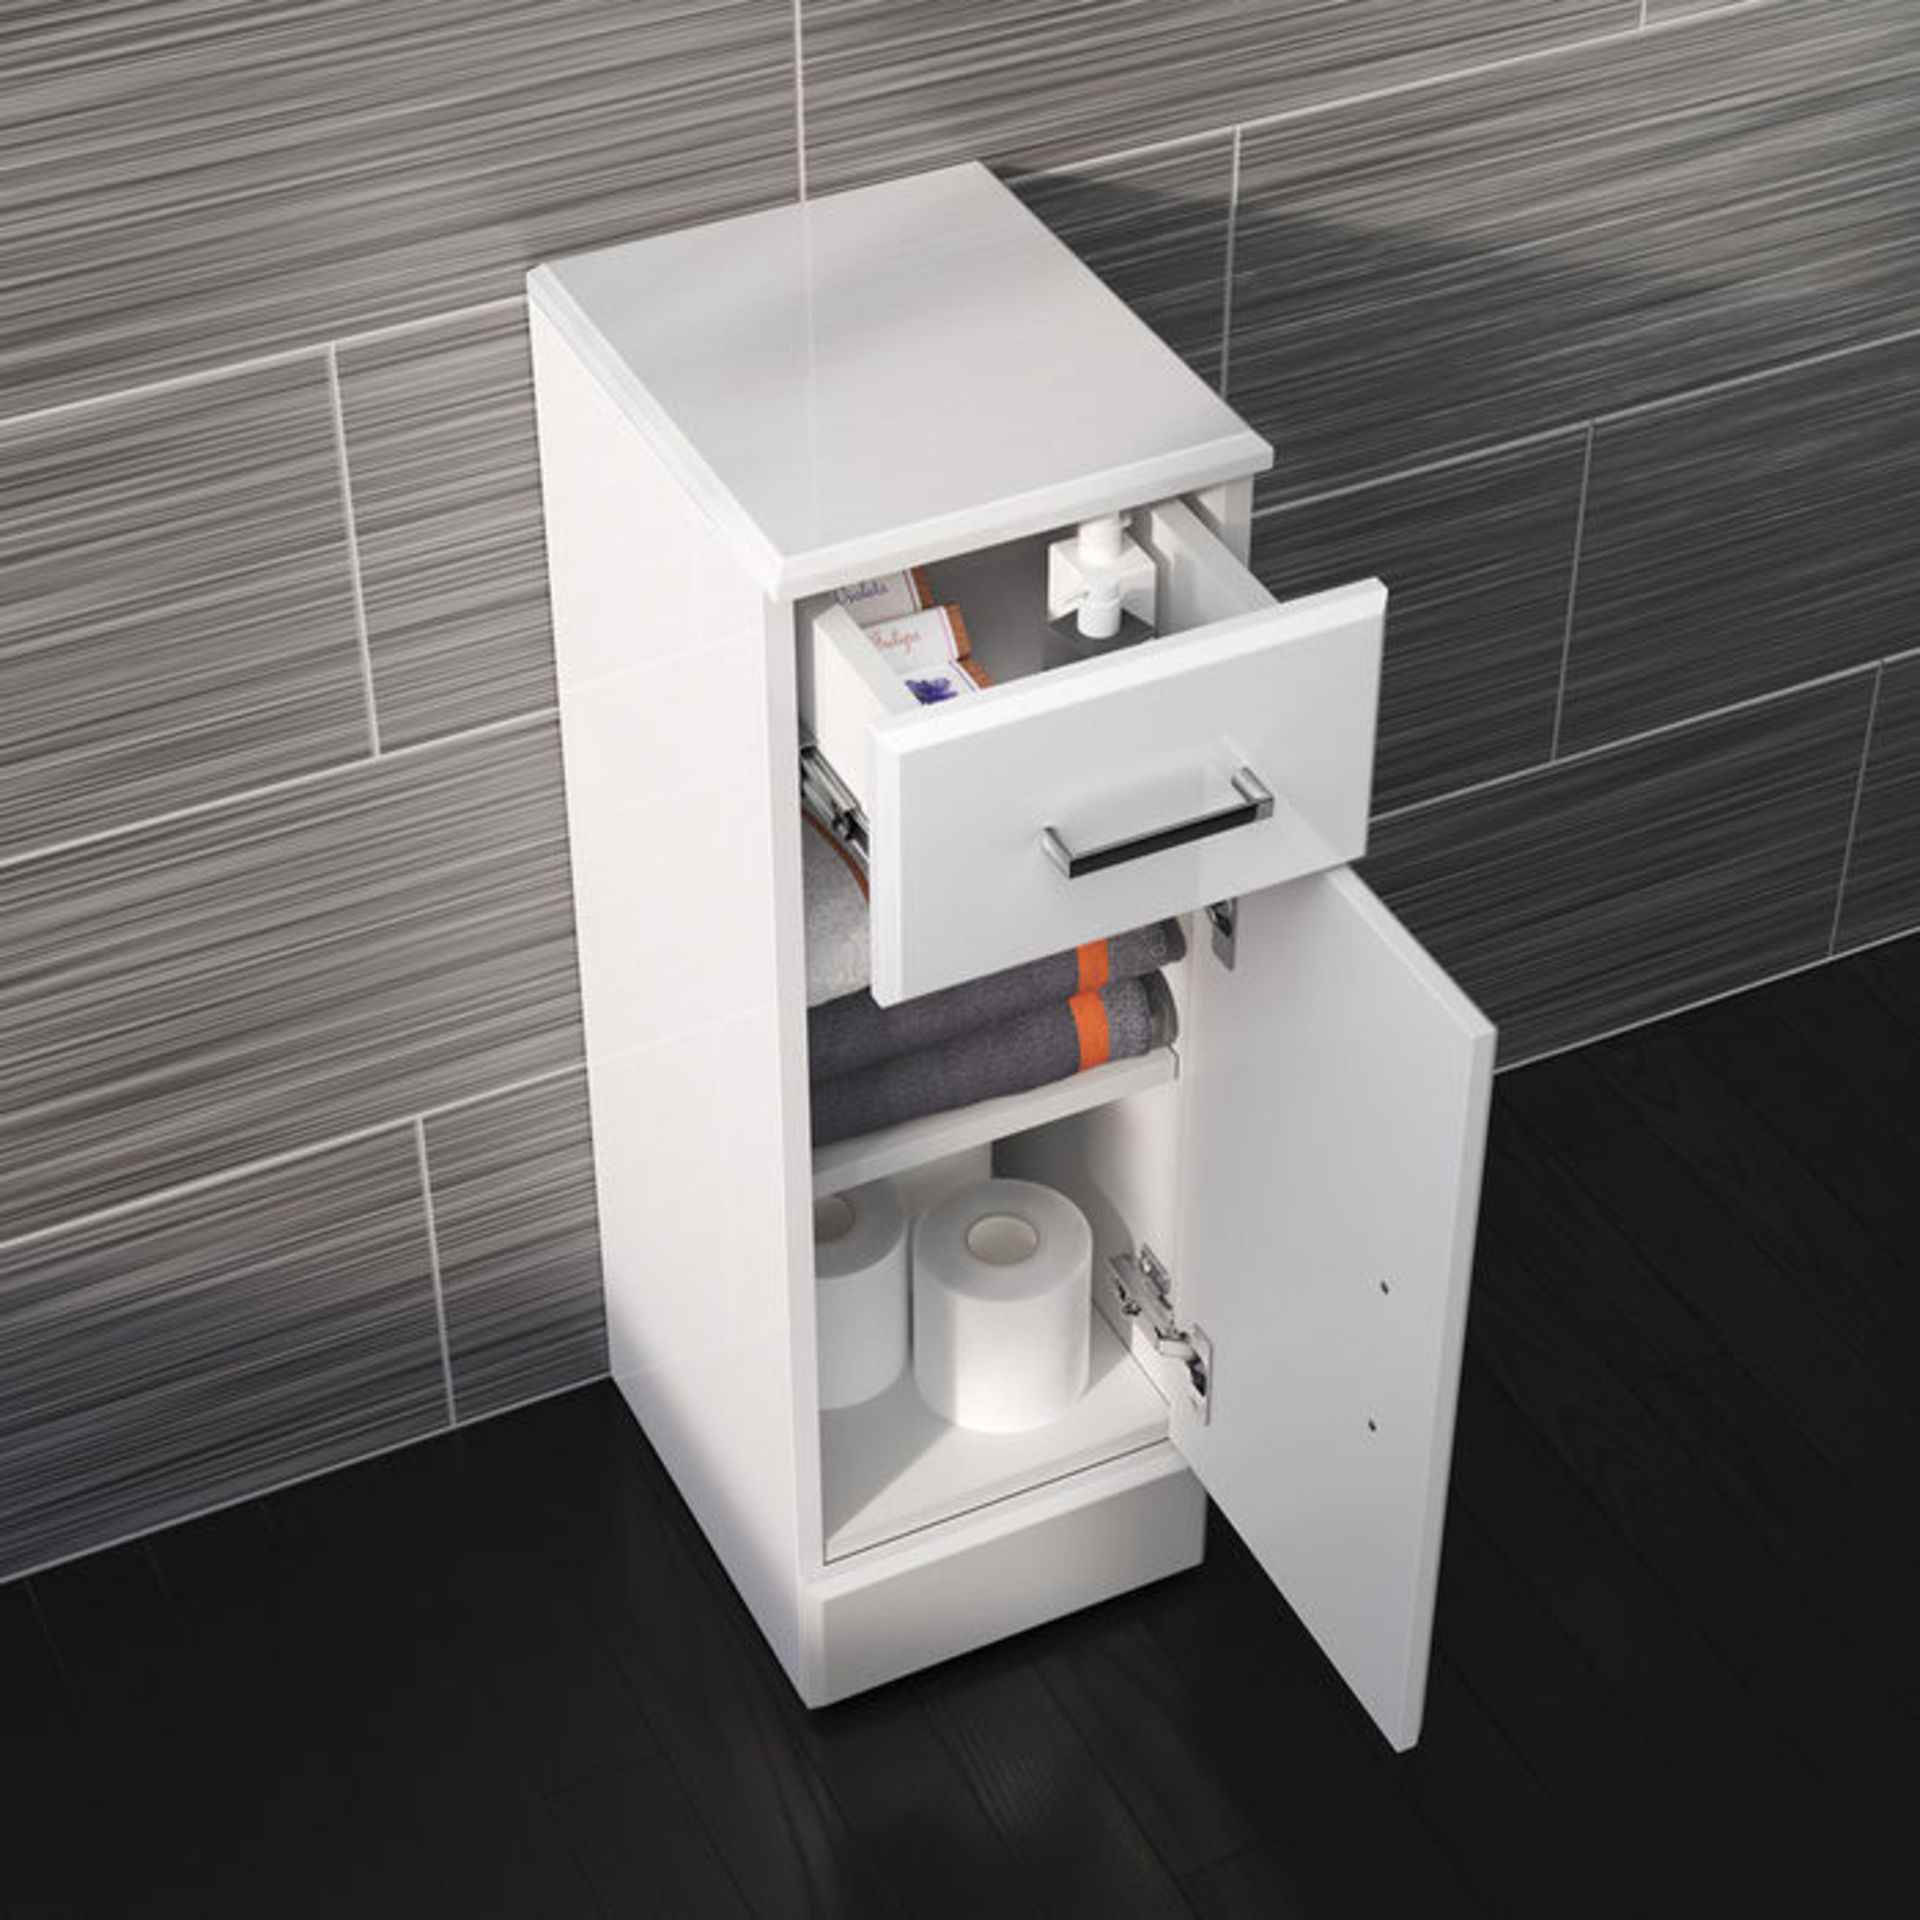 (T105) 250x300mm Quartz Gloss White Small Side Cabinet Unit. RRP £143.99.Pristine gloss white - Image 3 of 5